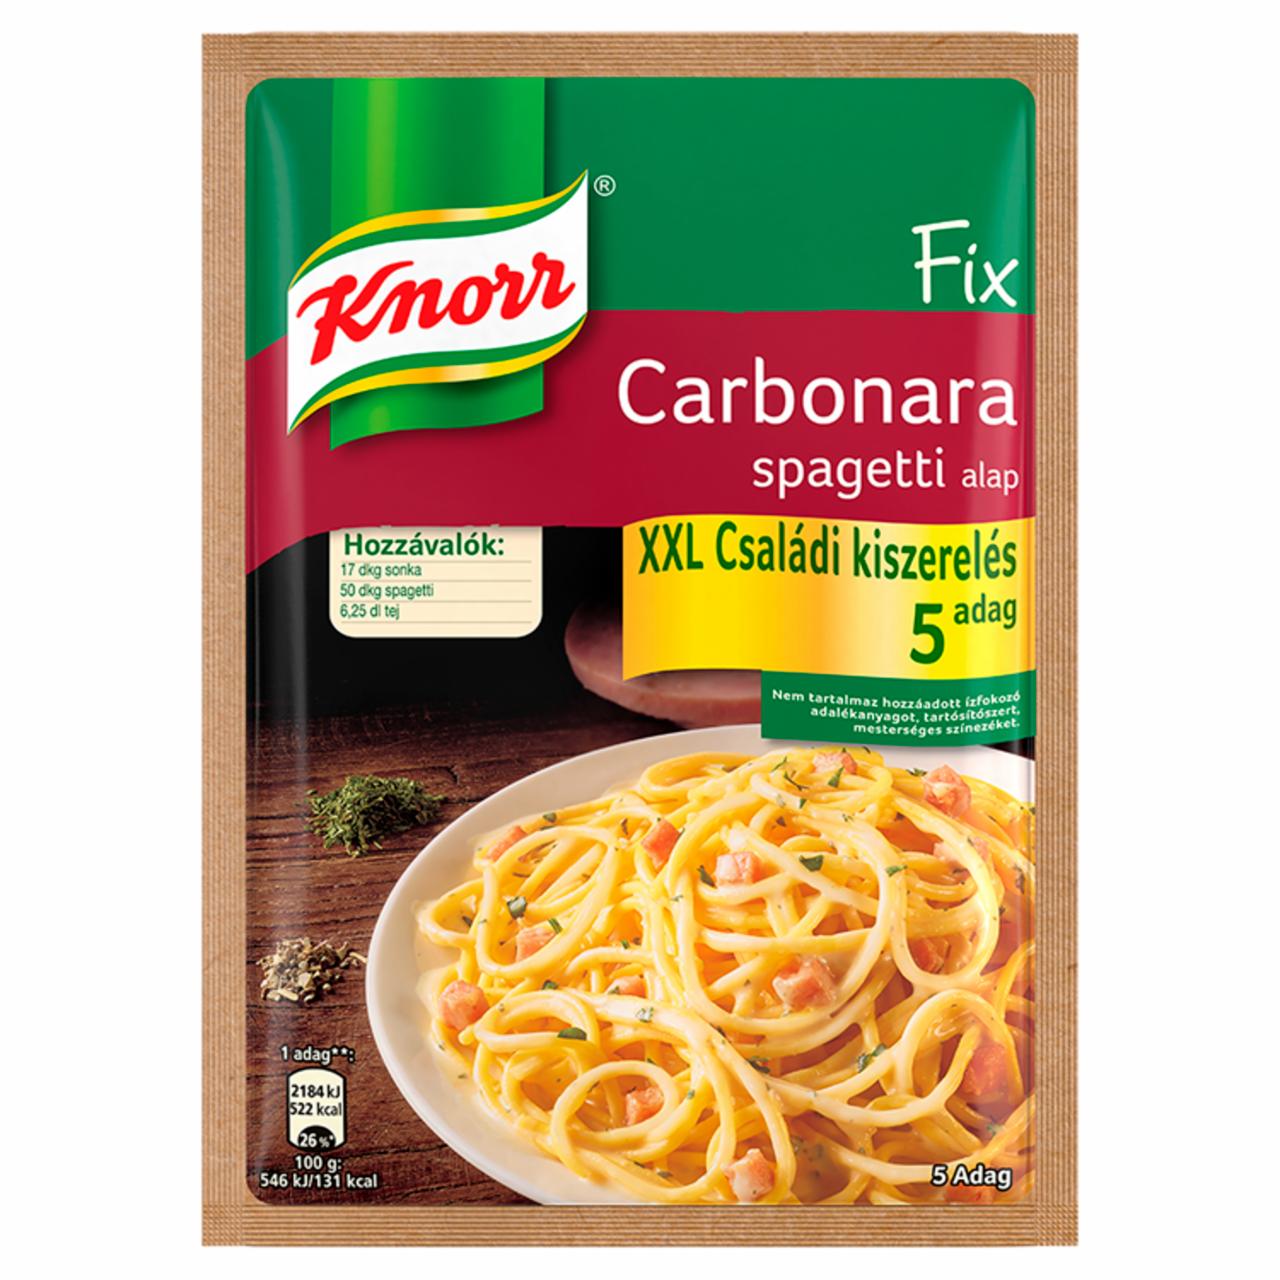 Képek - Knorr Carbonara spagetti alap 60 g